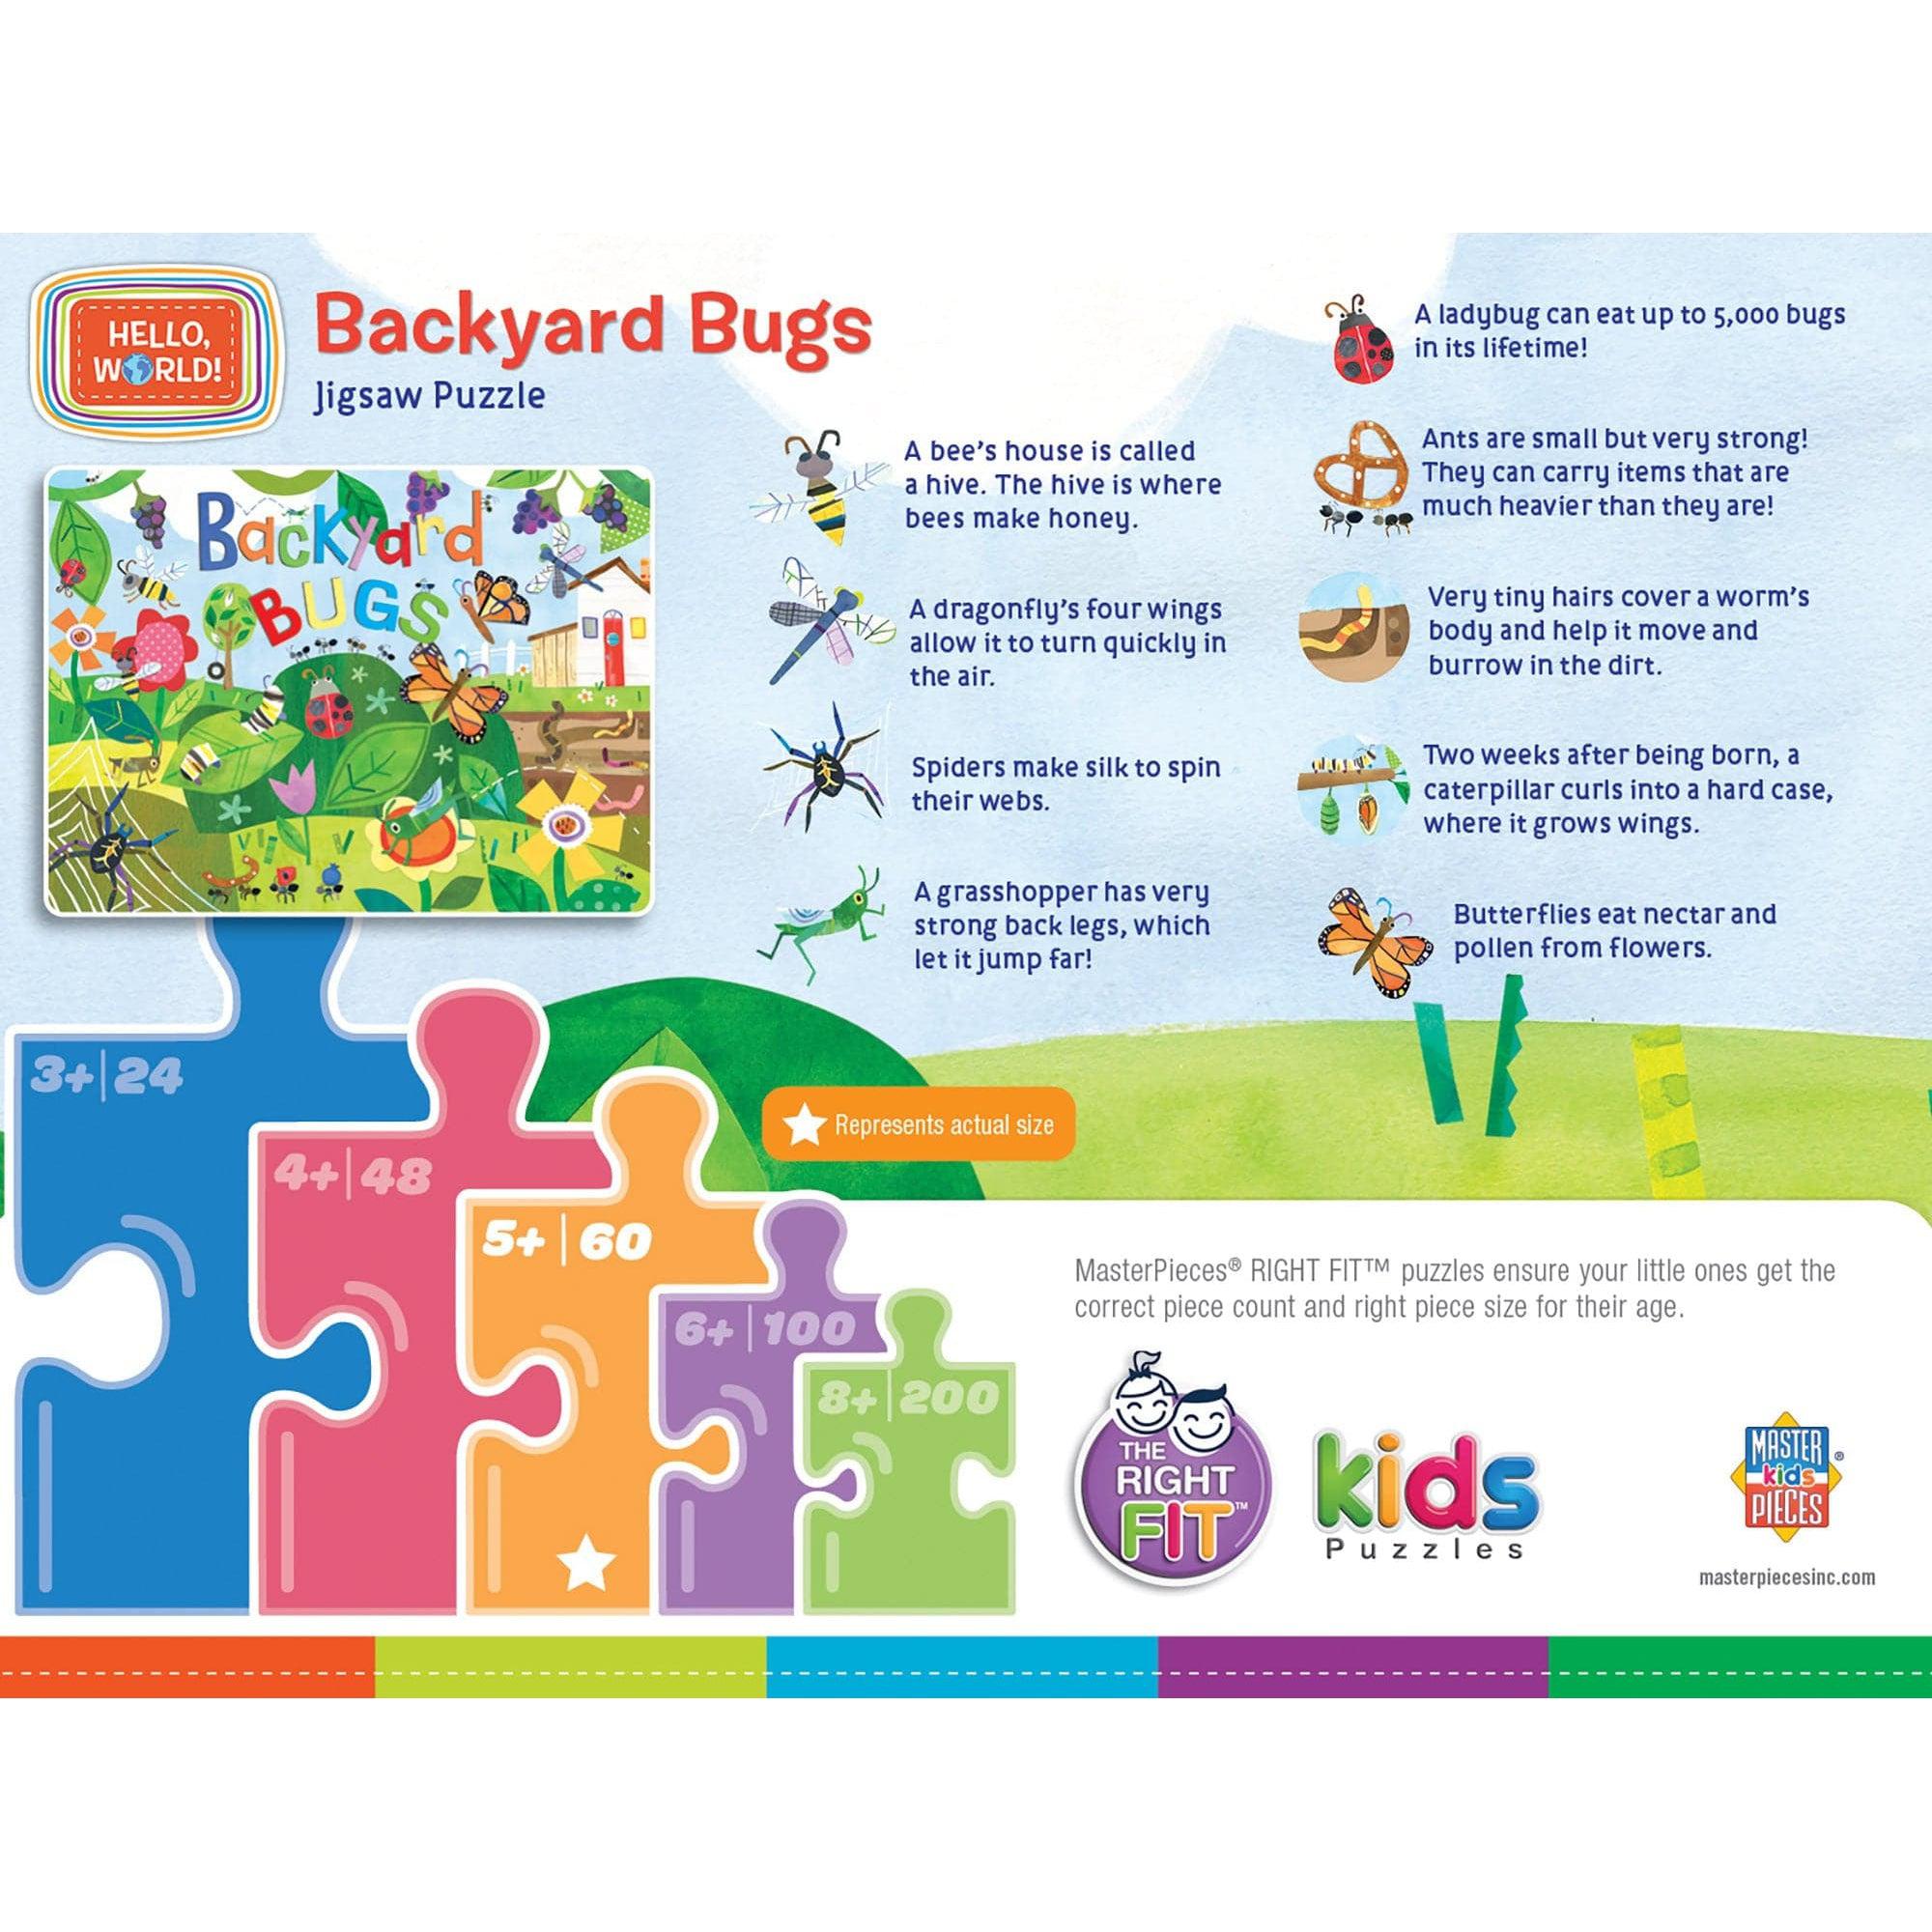 MasterPieces-Hello World! - Backyard Bugs - 60pc Puzzle-12233-Legacy Toys